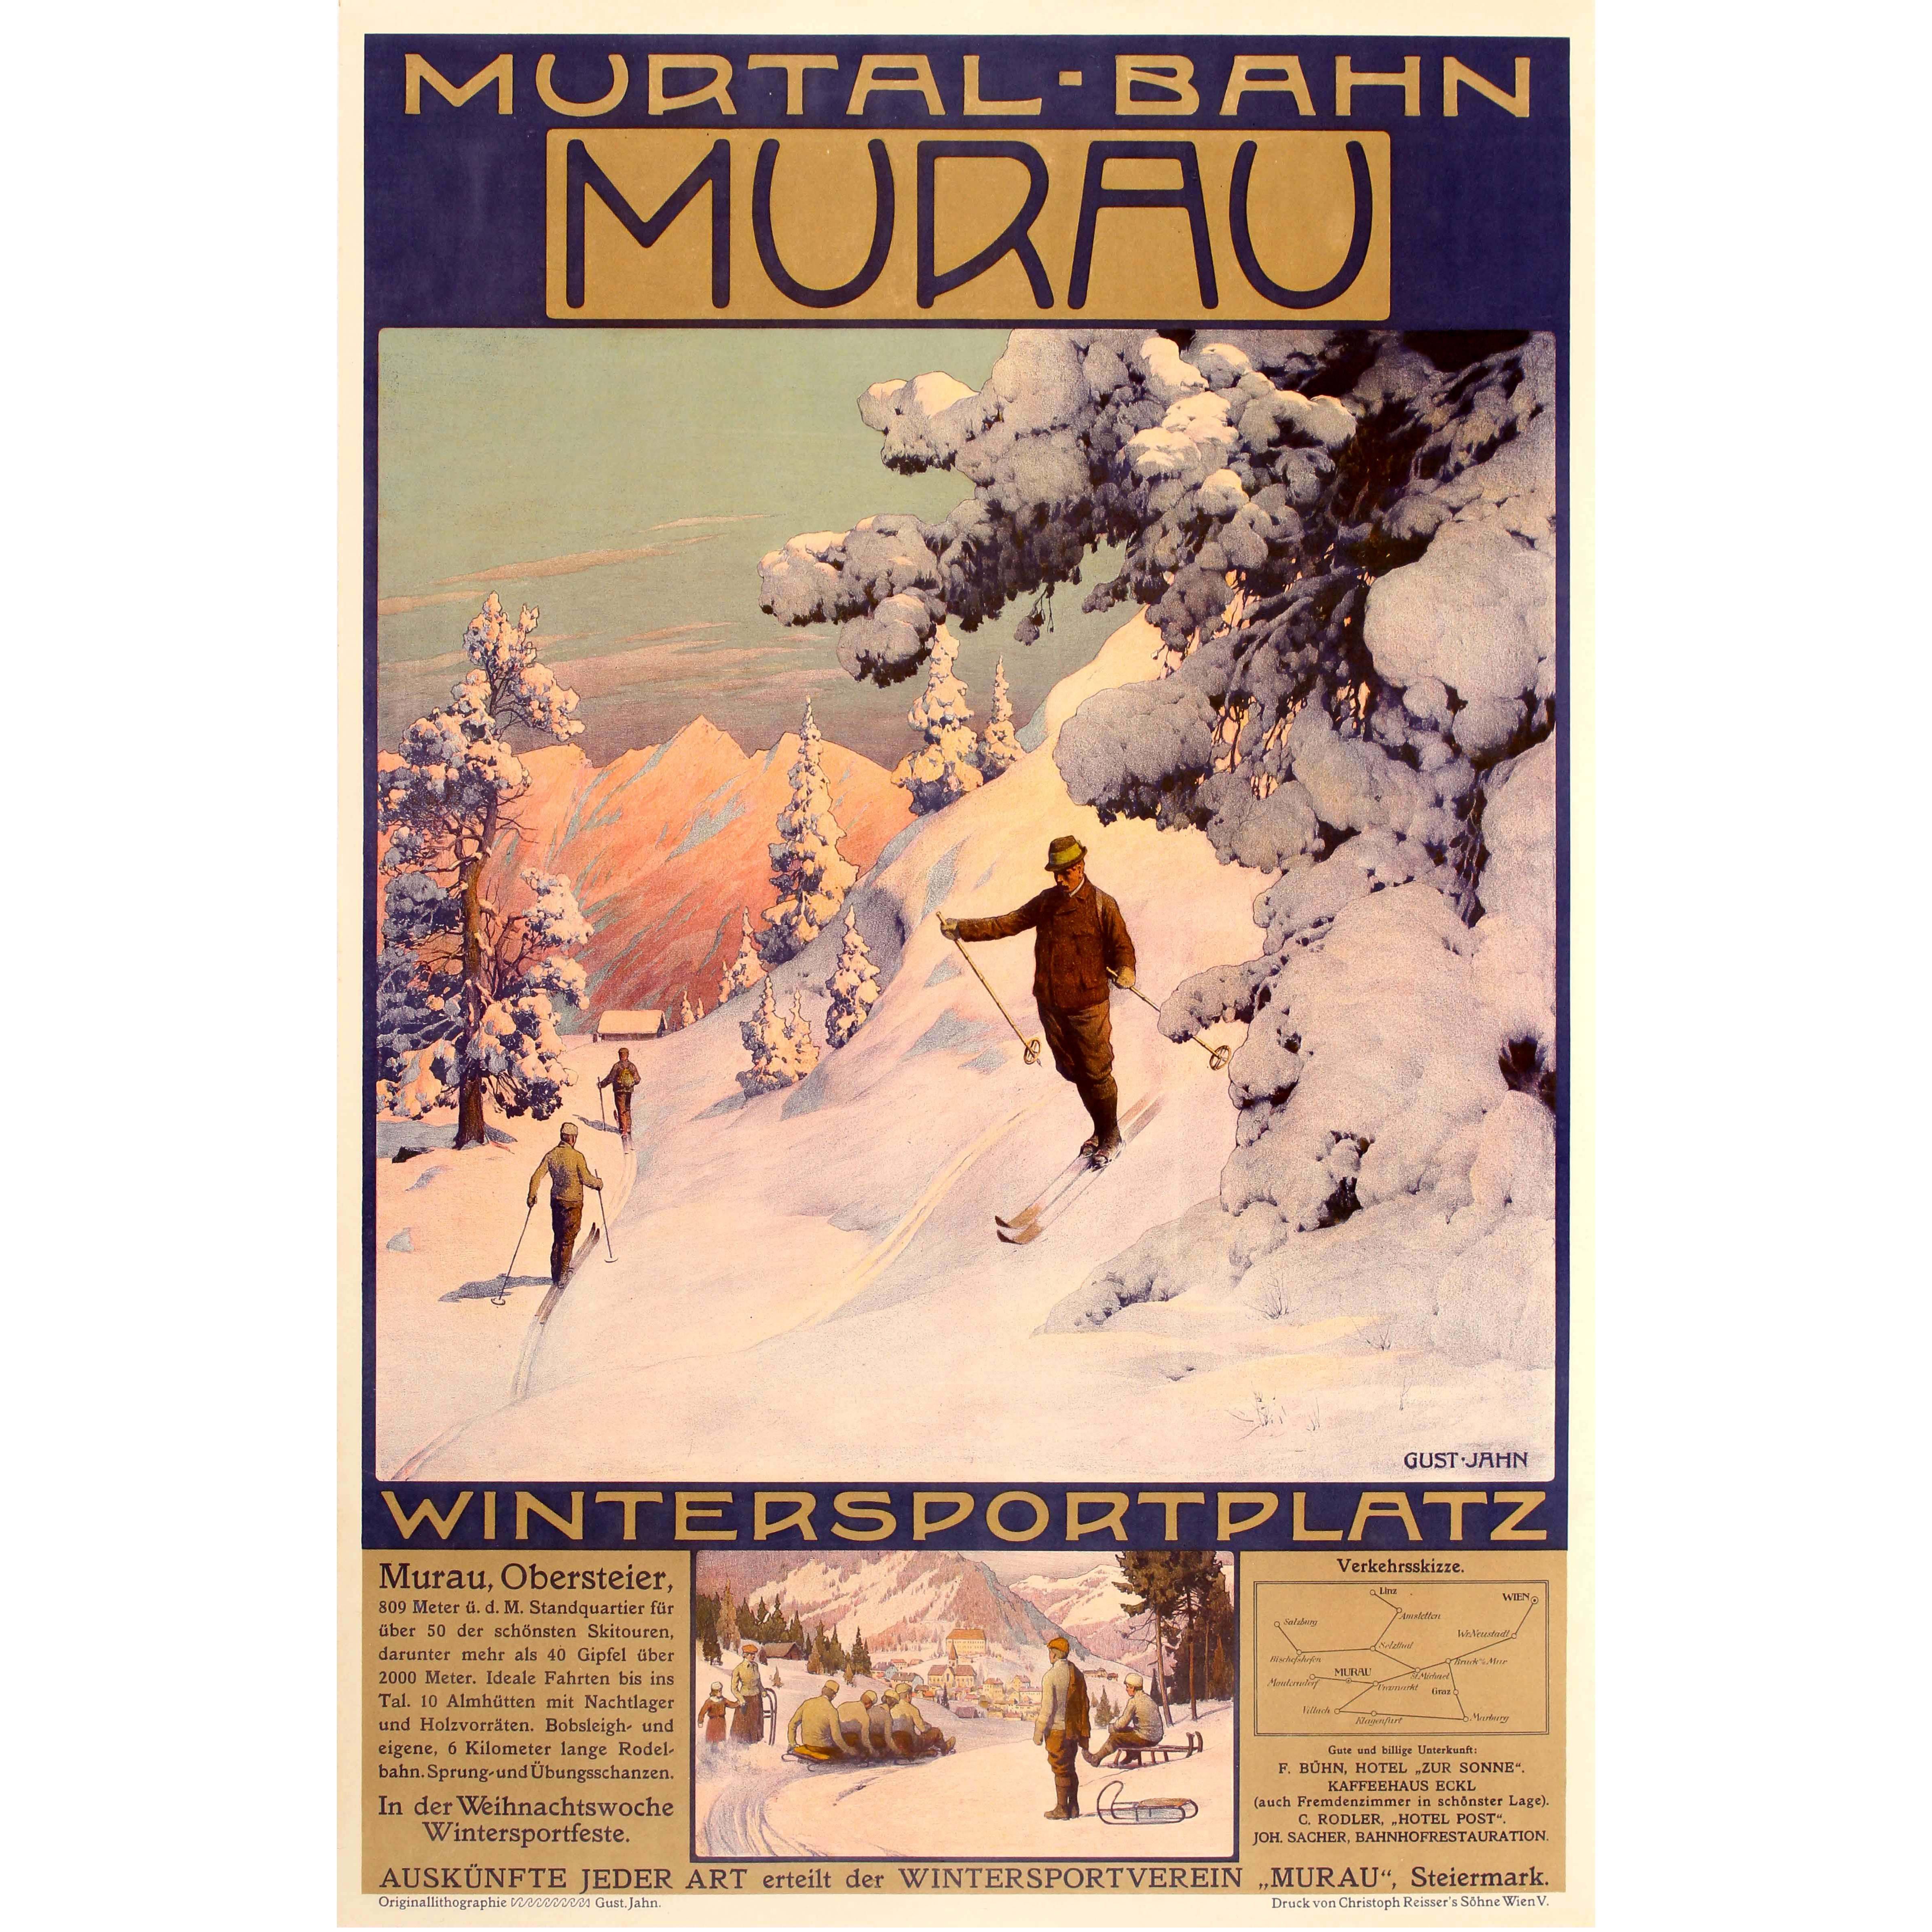 Original Murtal Bahn Travel Poster for Skiing and Winter Sports in Murau Austria